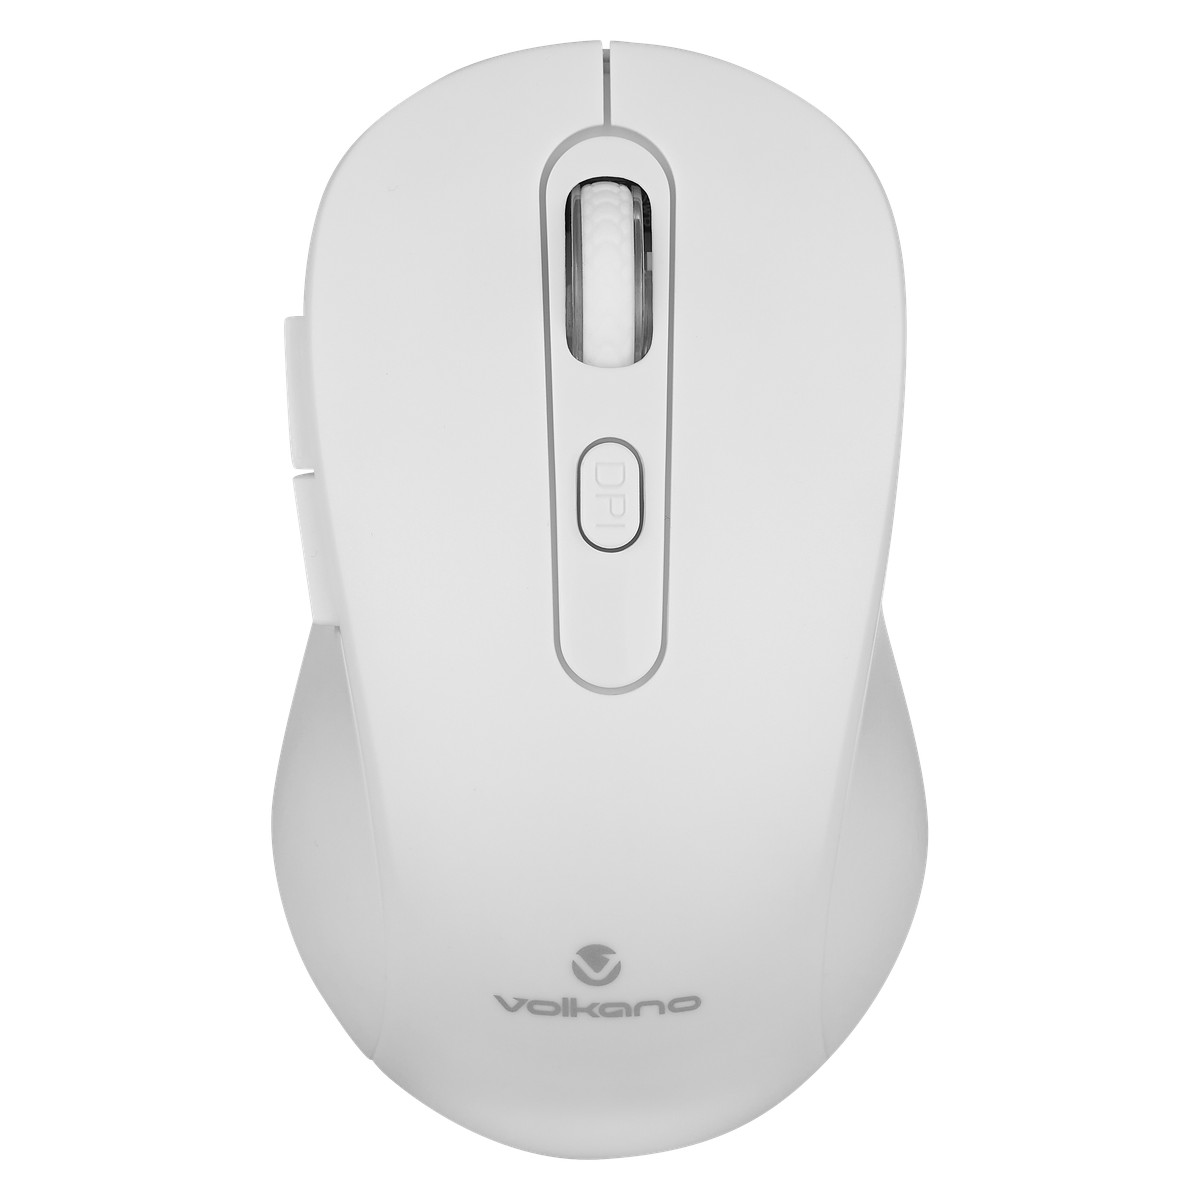 Volkano Sodium series 2.4Ghz Wireless Mouse (White)